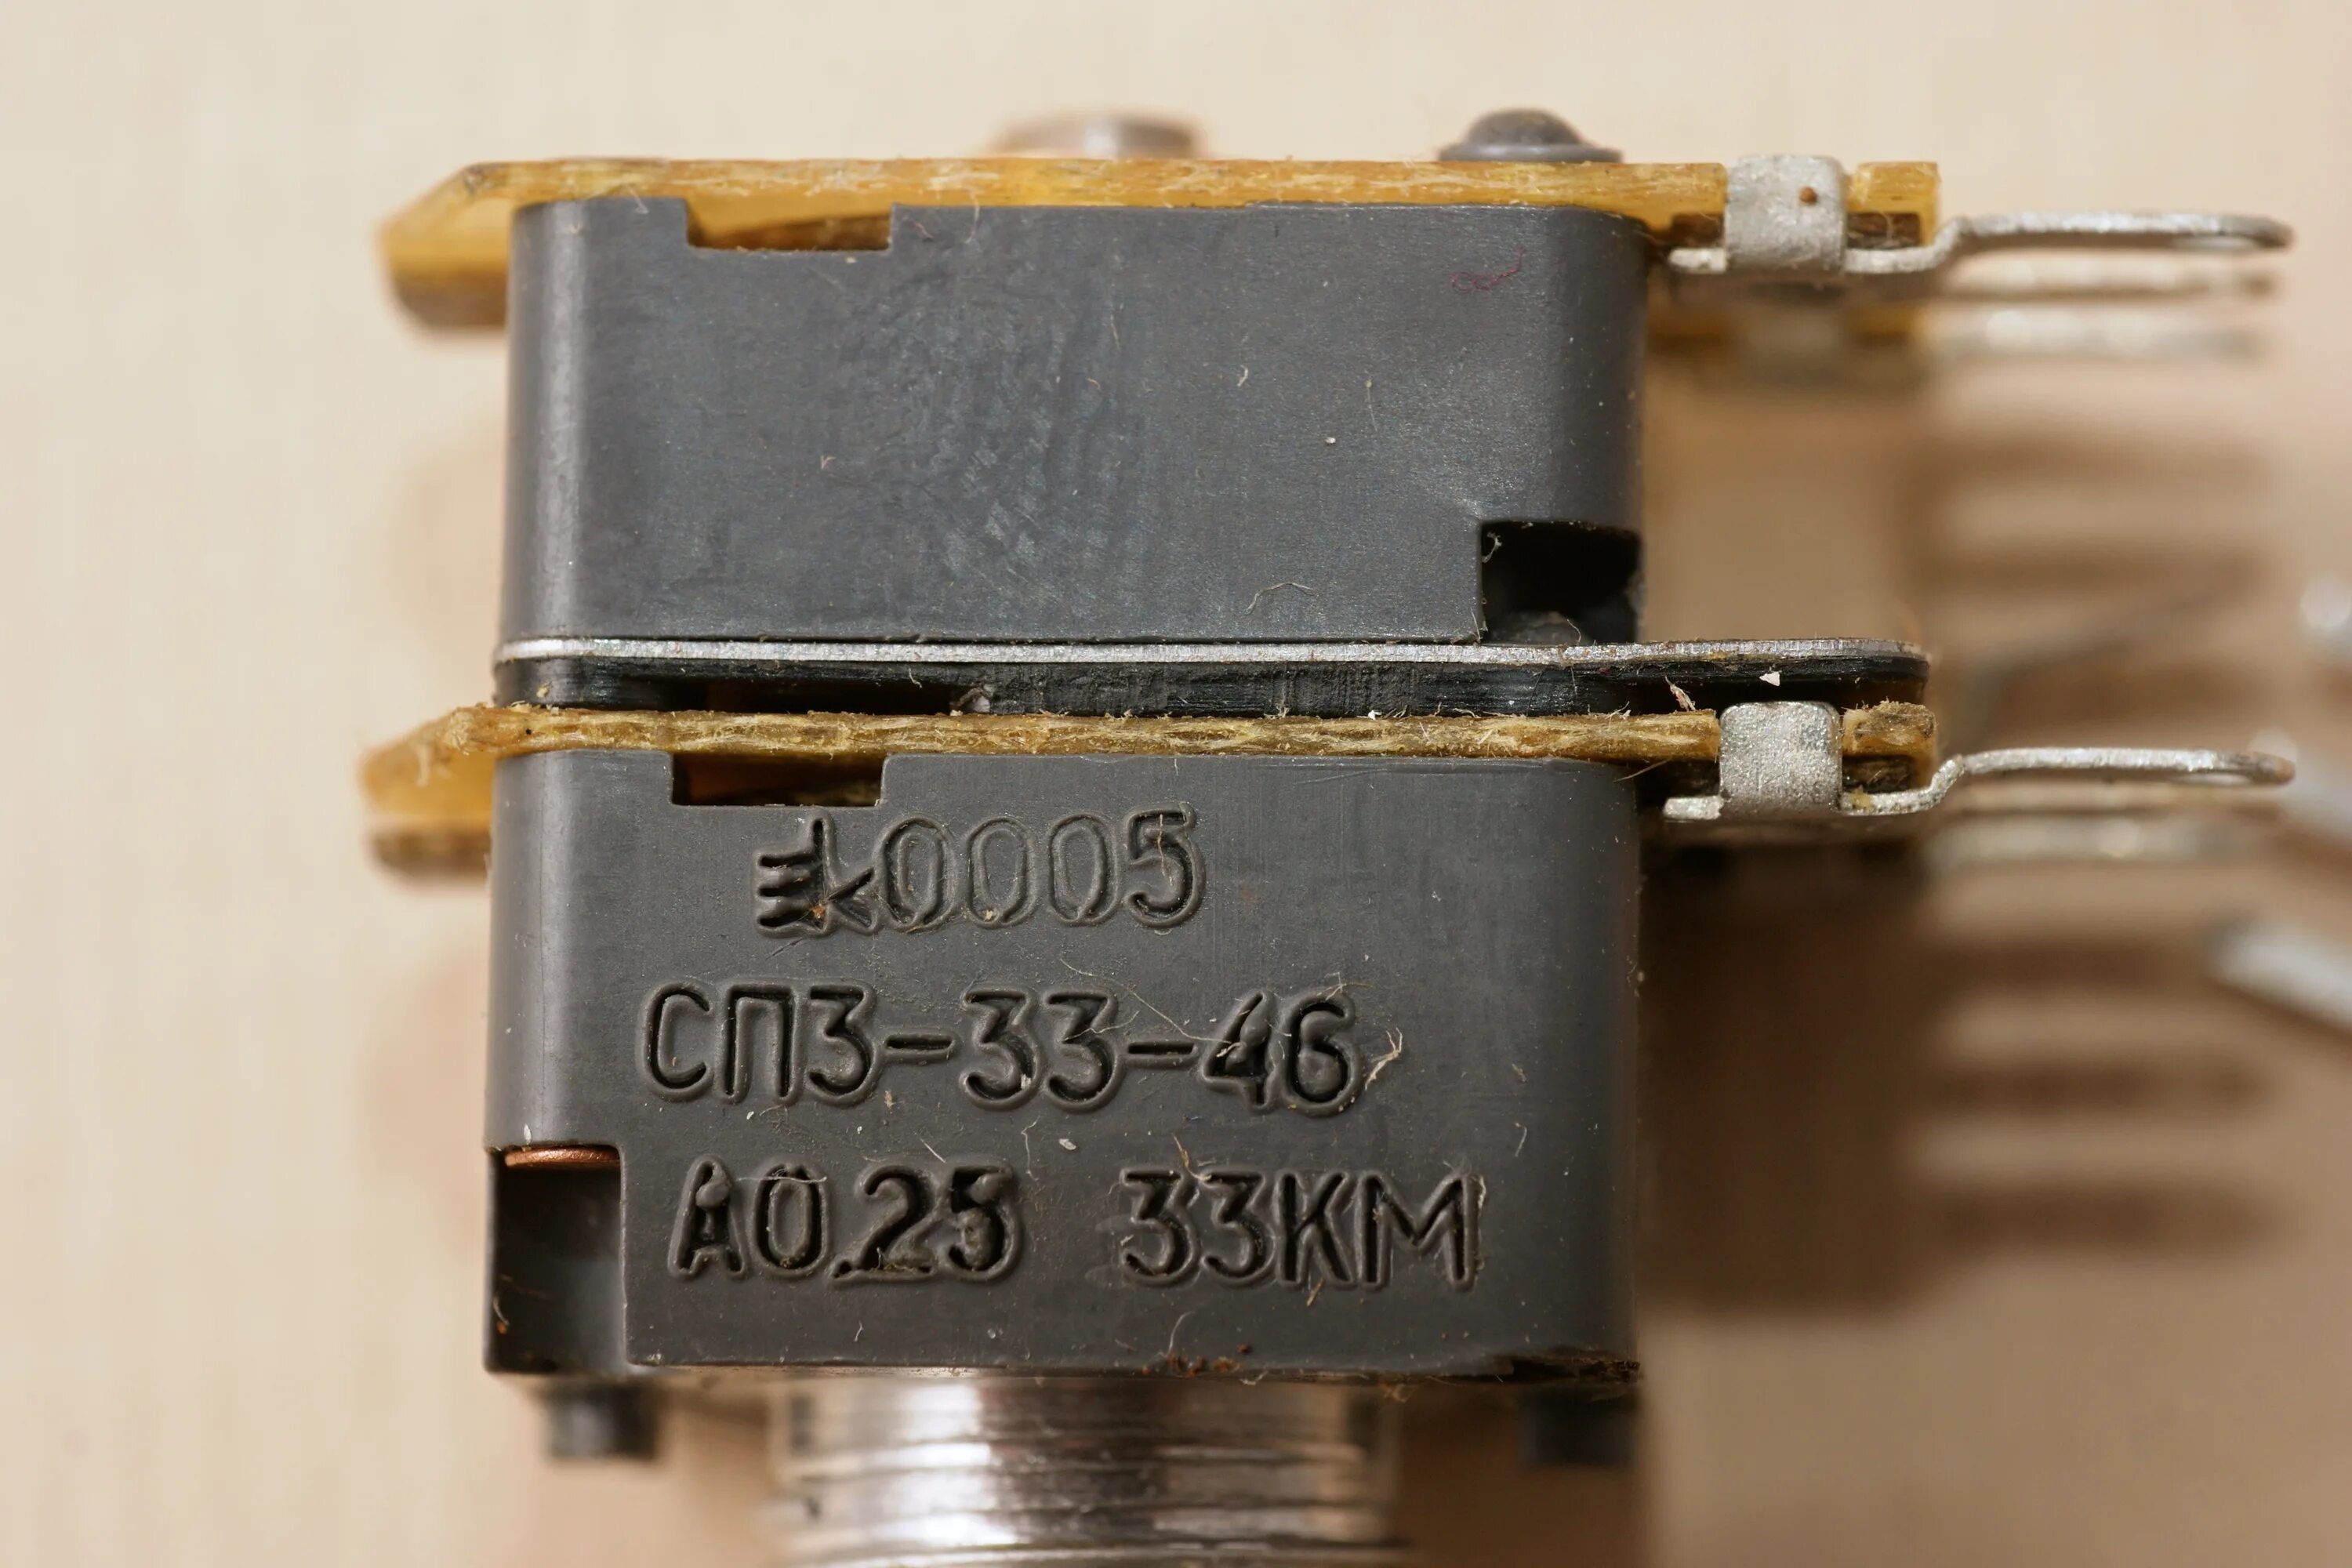 Резистор сп 3. Резистор сп3-33-46. Потенциометр сп3-33 маркировка. Сп3-3вм. Потенциометр сп3-33 25 мм.